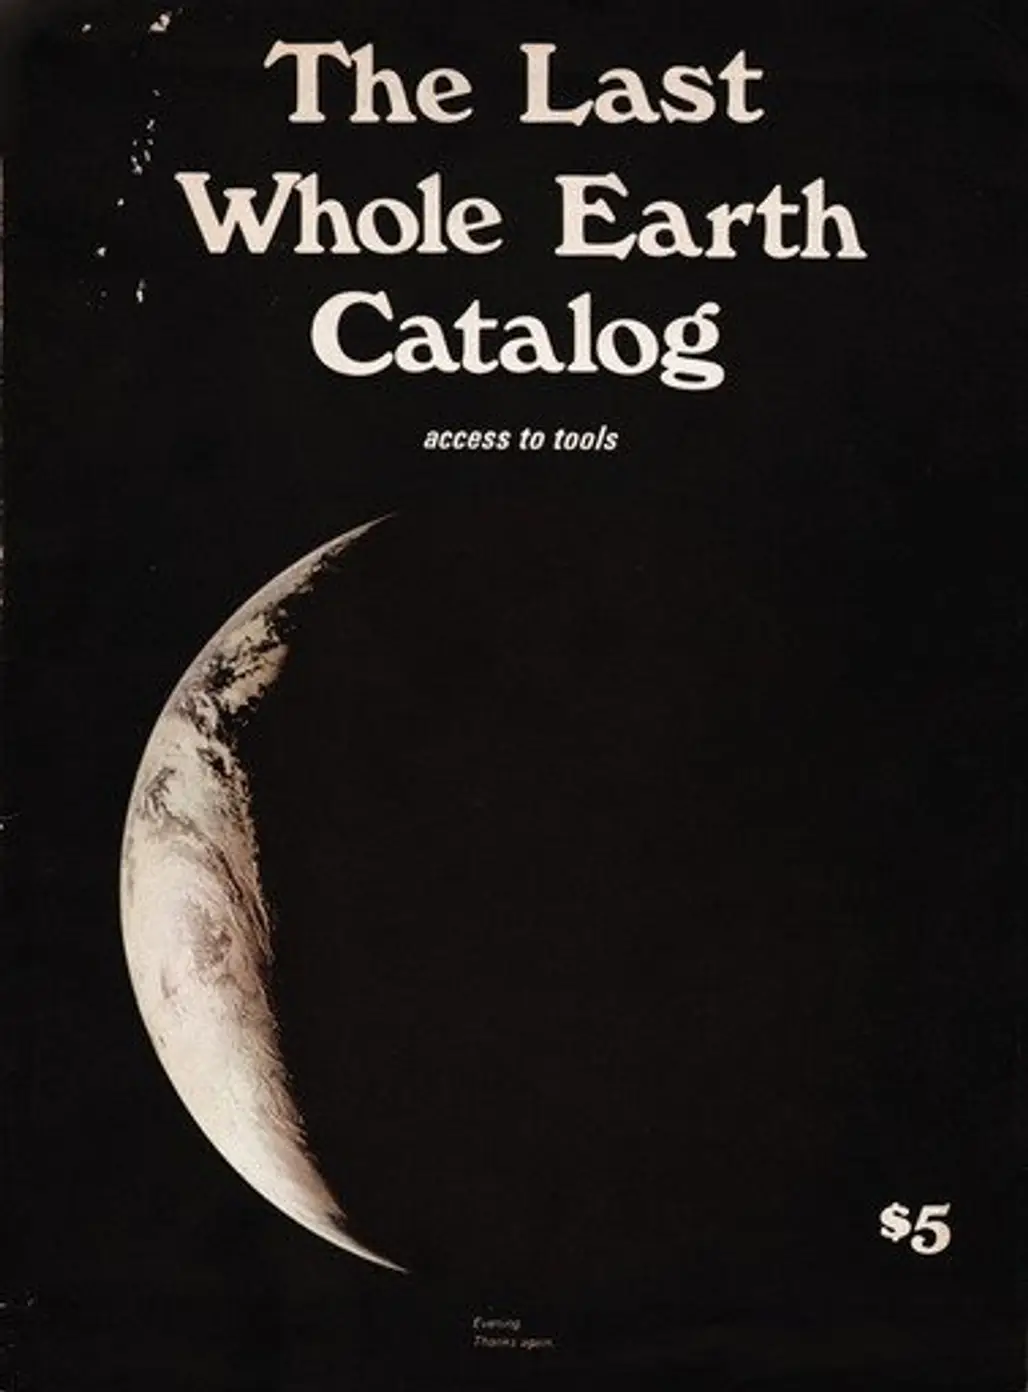 The Last Whole Earth Catalog: Access to Tools